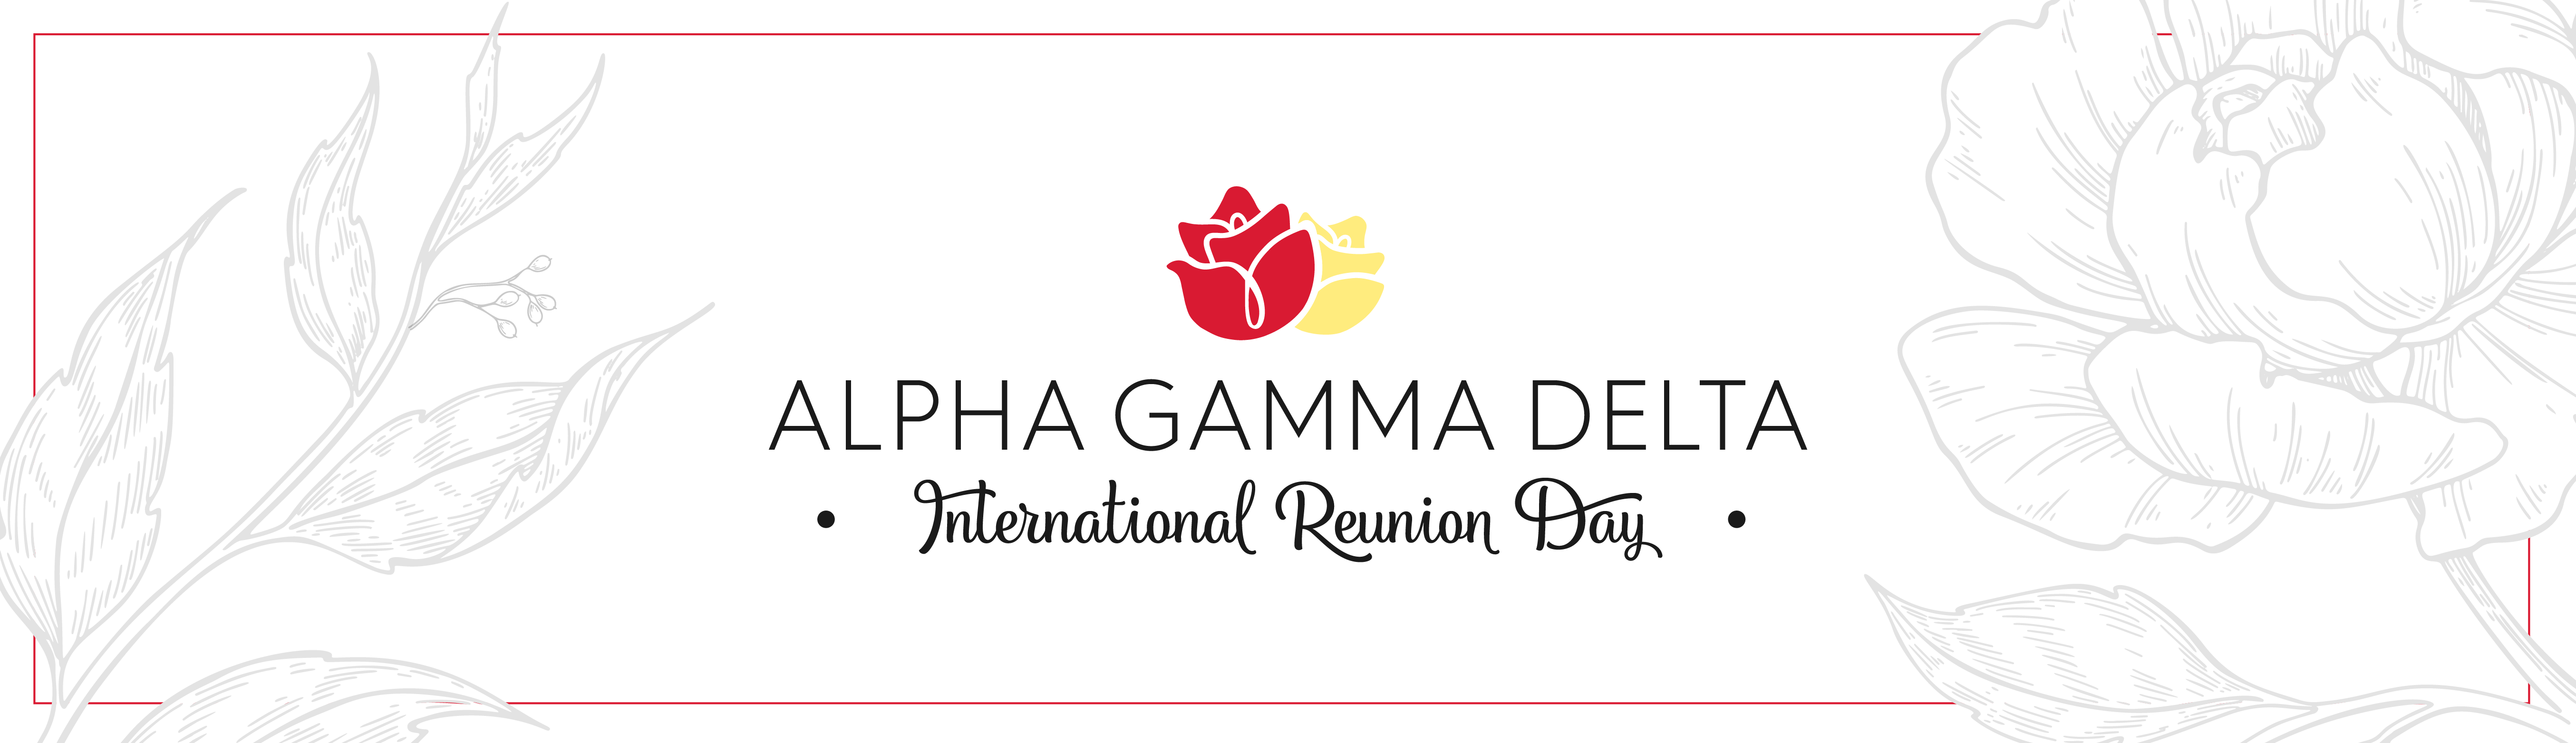 Alpha Gamma Delta International Reunion Day